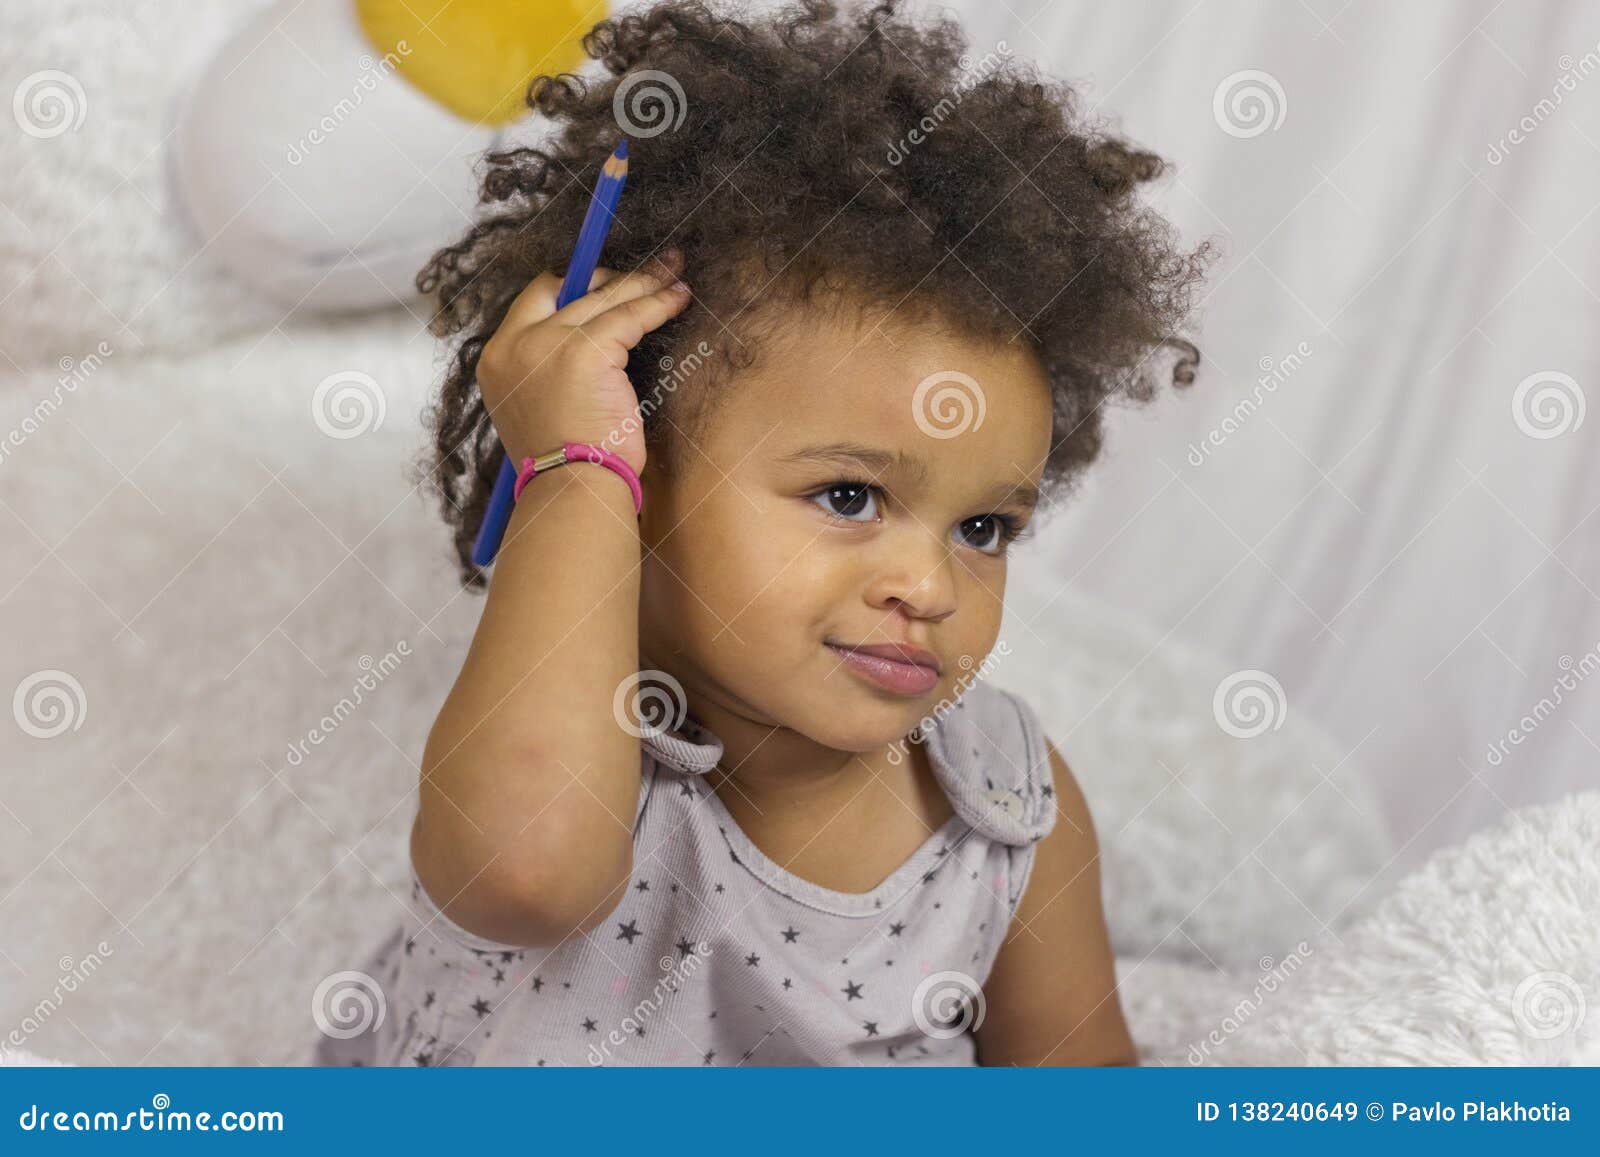 Cute Child Touching Curly Hair Stock Image - Image of joyful, grey:  138240649